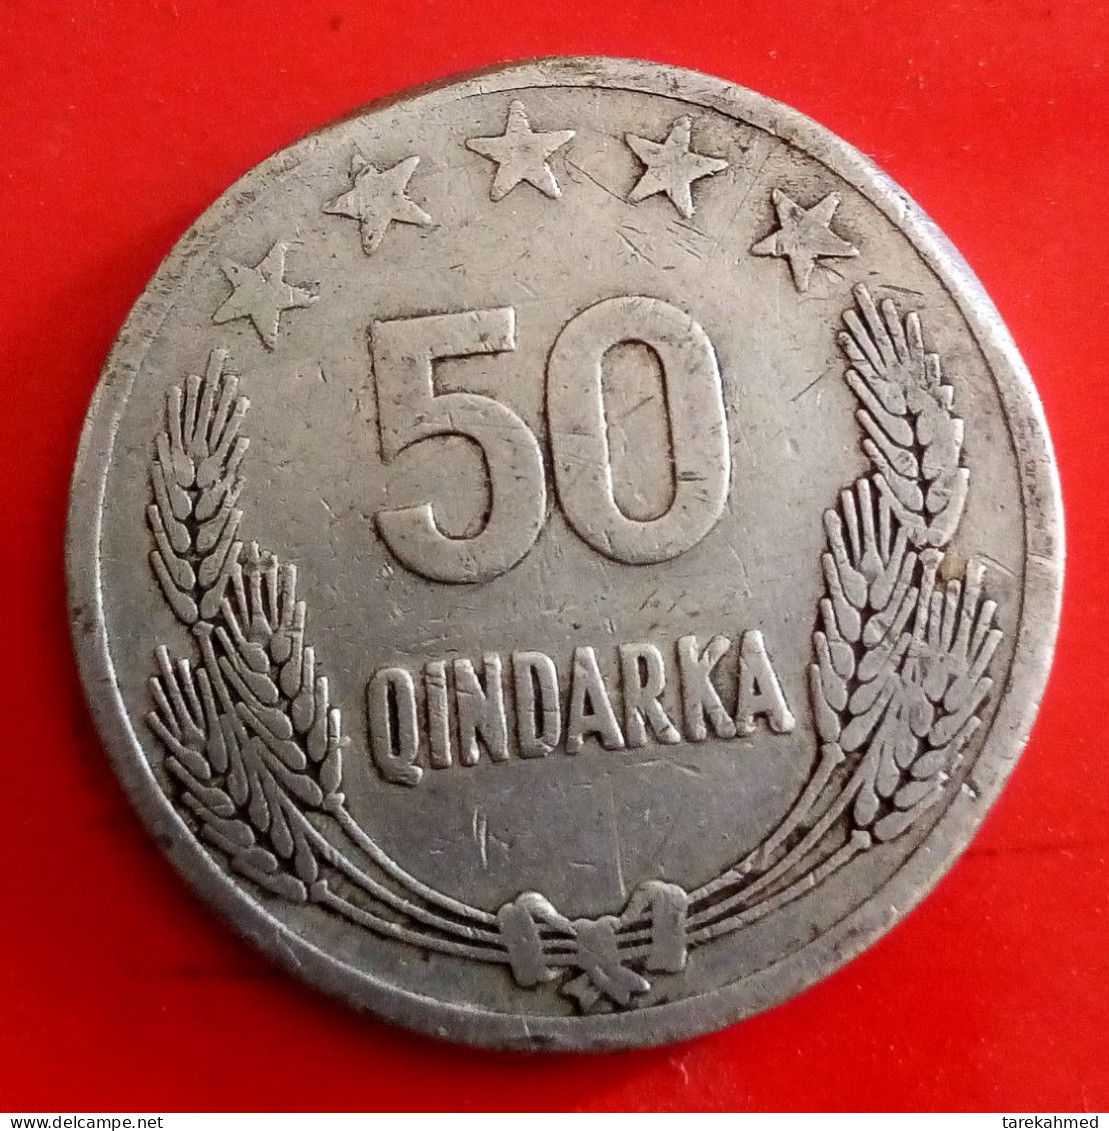 ALBANIA - 50 QINDARKA, 1964 - KM 42 - Agouz - Albania